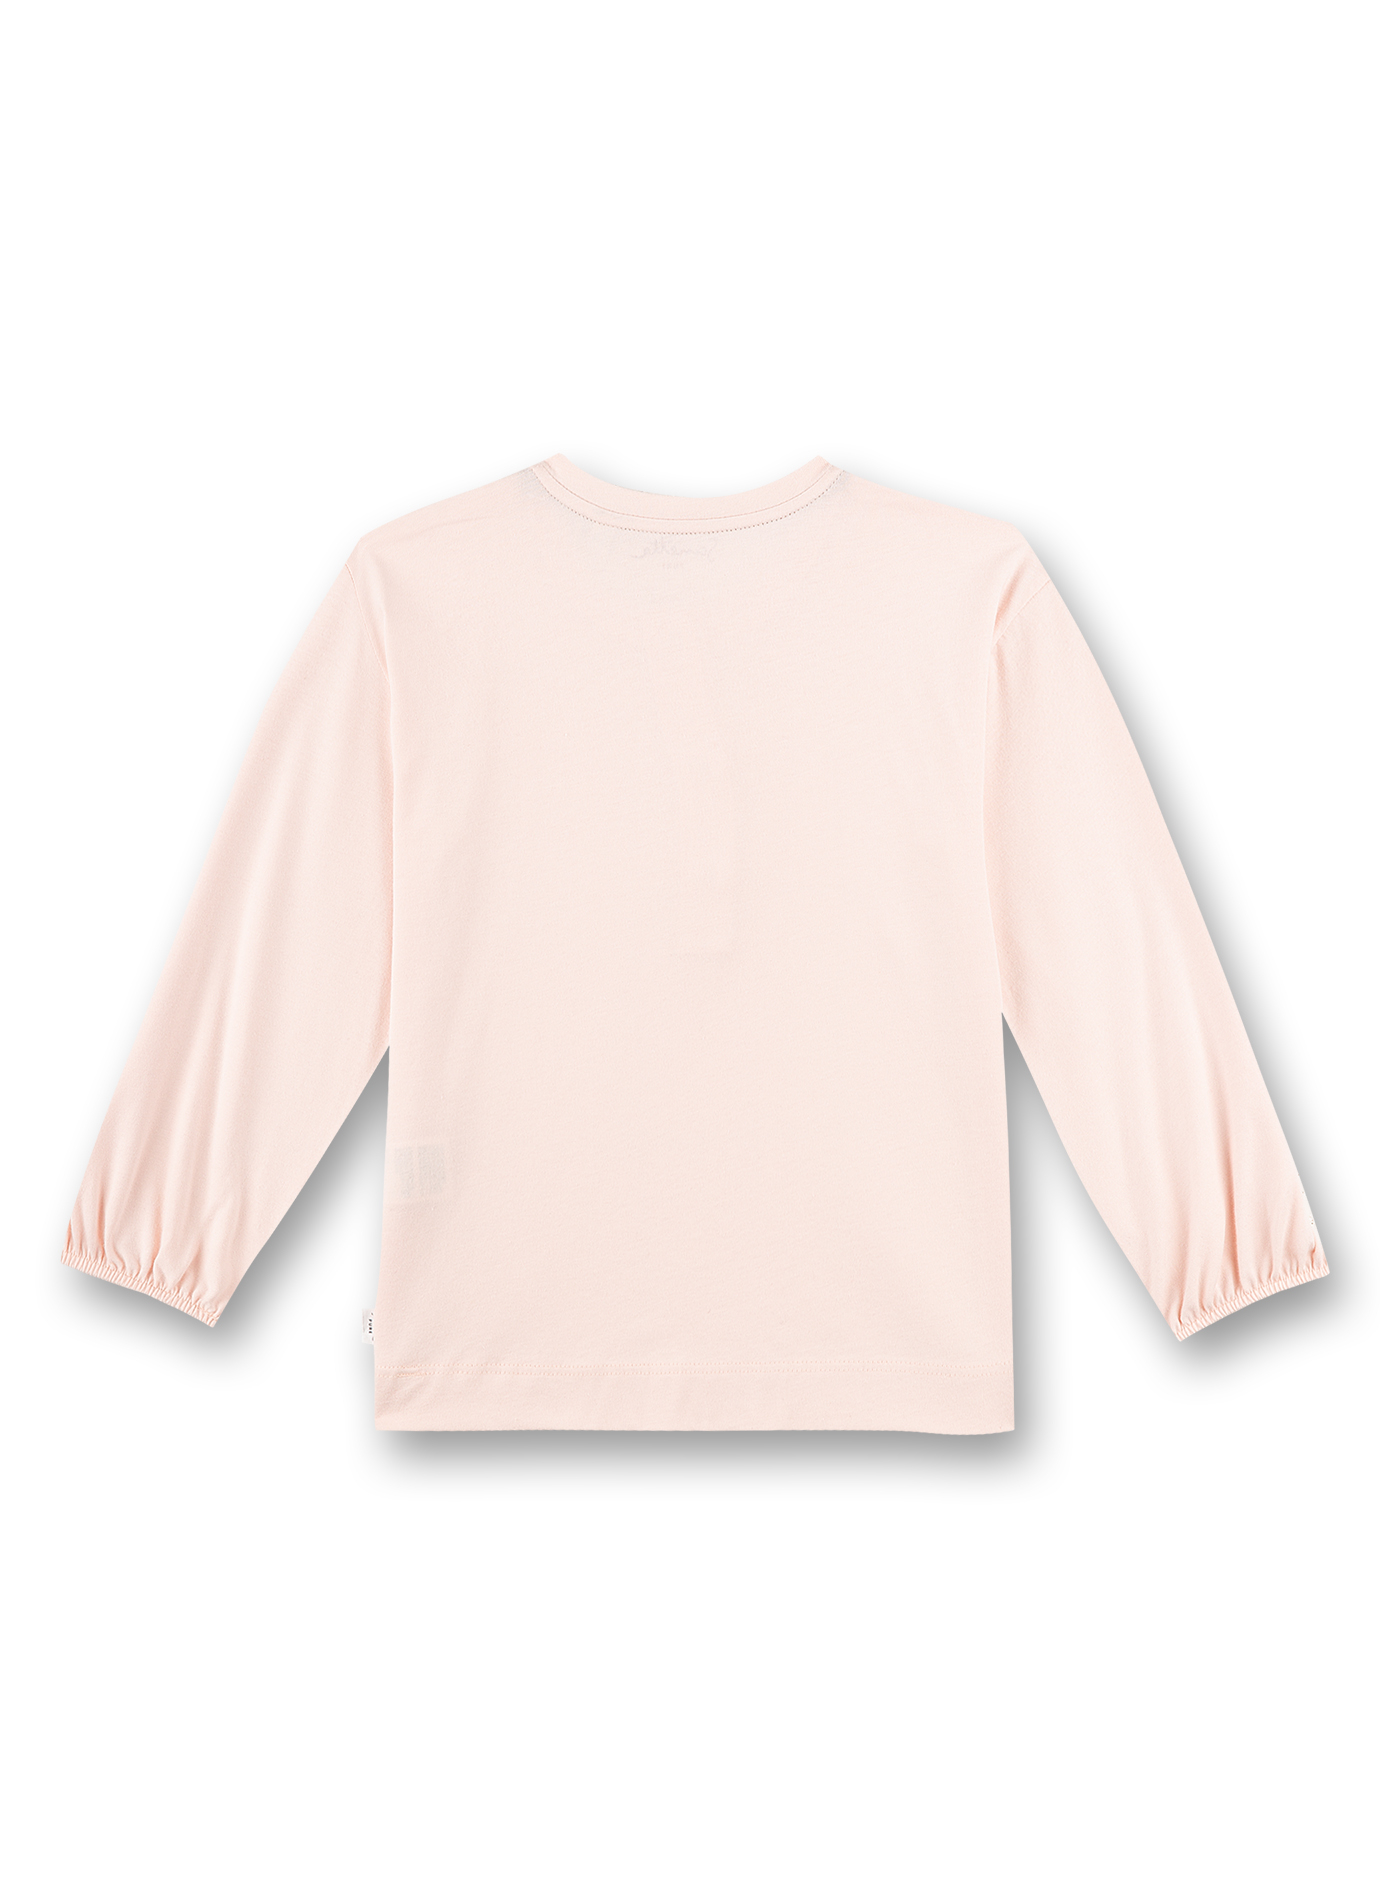 Mädchen-Shirt langarm Rosa